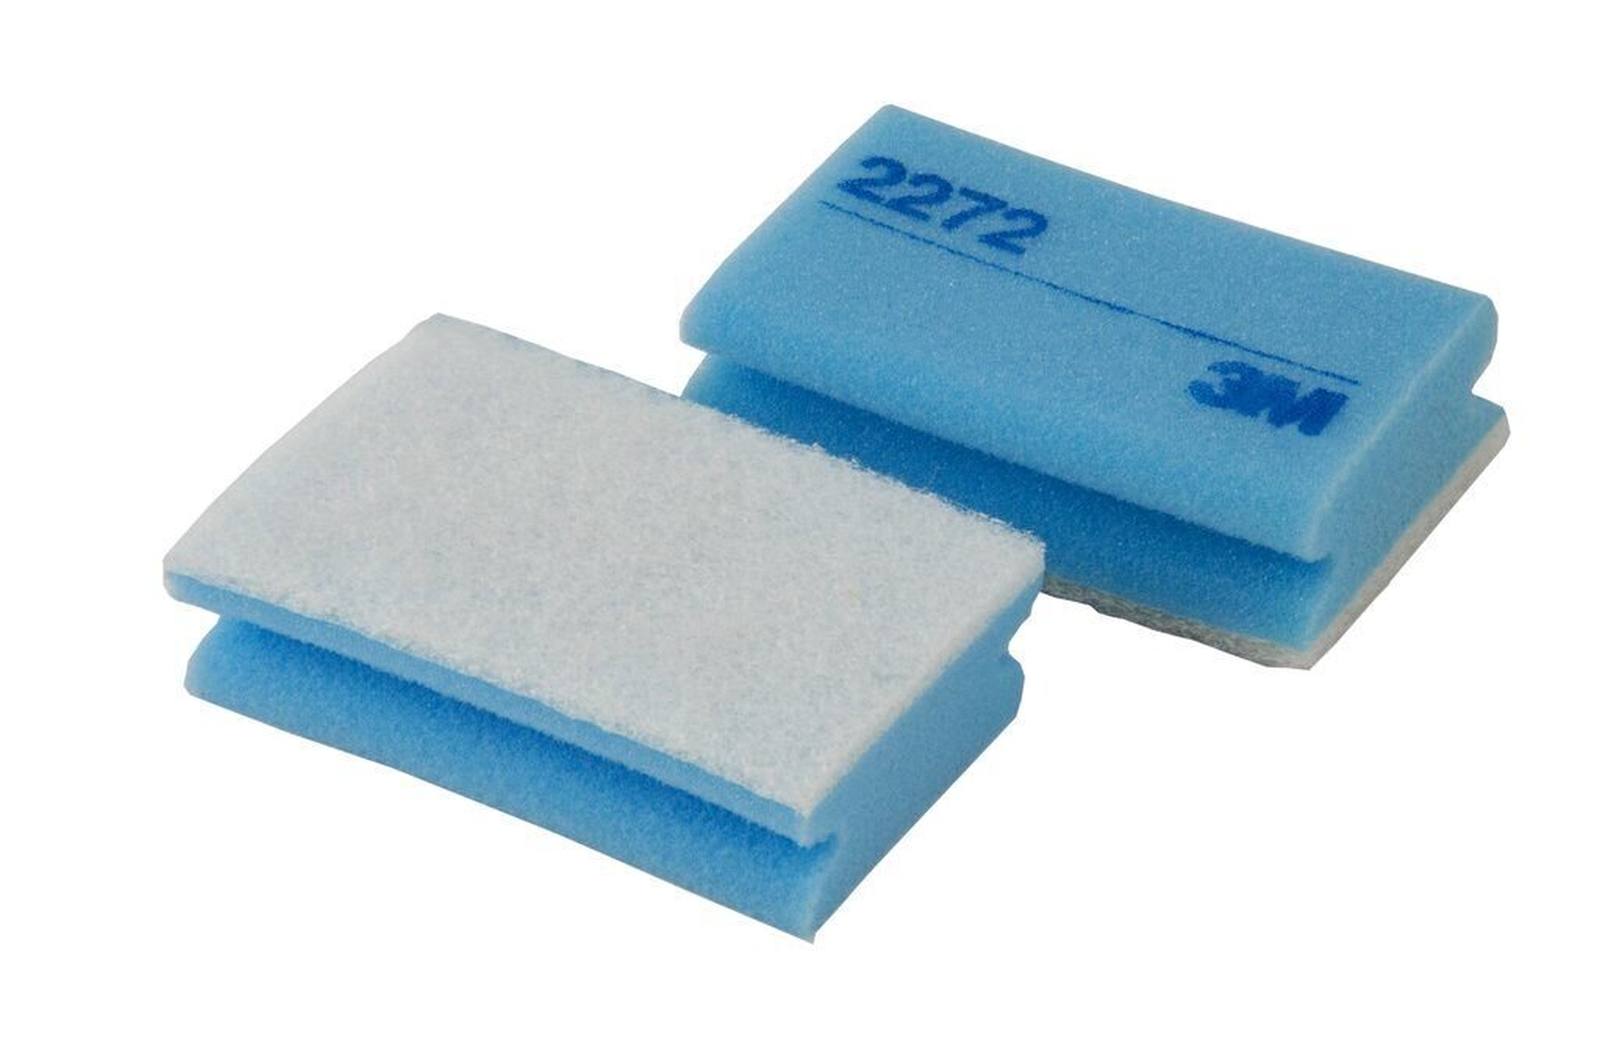 3M Scotch-Brite Cleaning sponge 2272 blue/white 95mmx150mm